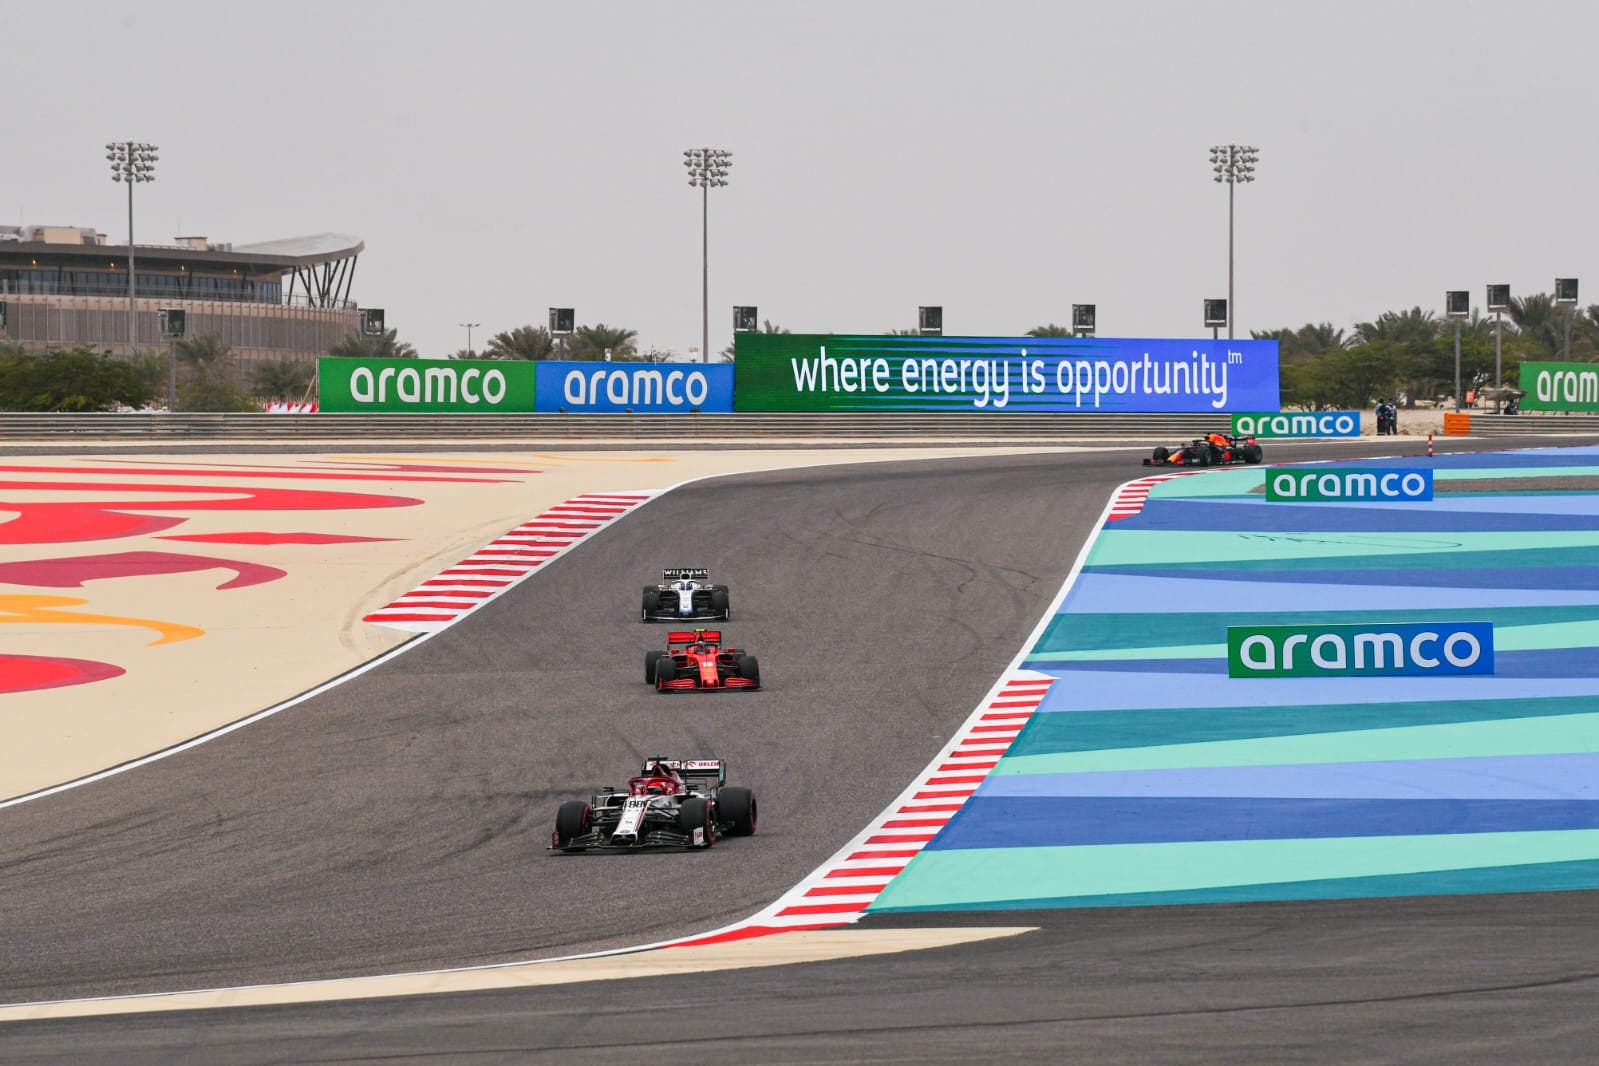 Saudi Aramco branding at the F1 track in Manama. (Supplied)